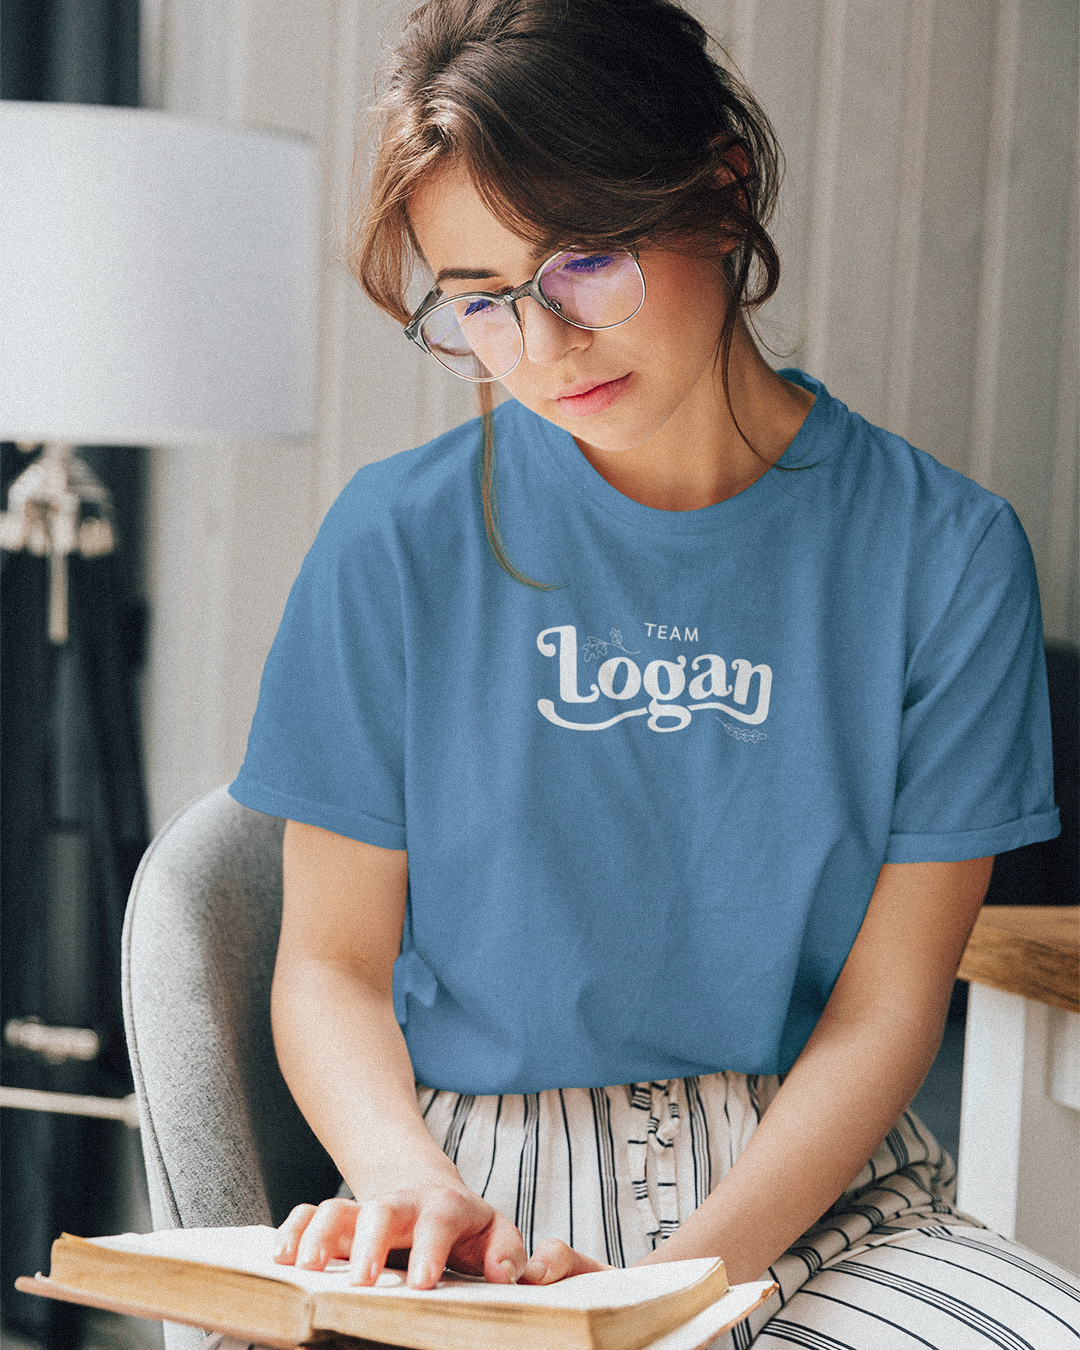 Team Logan Huntzberger T-Shirt - Gilmore Girls Inspired T-Shirt - Rory Gilmore's Boyfriends - Team Logan Huntzberger Inspired T-Shirt